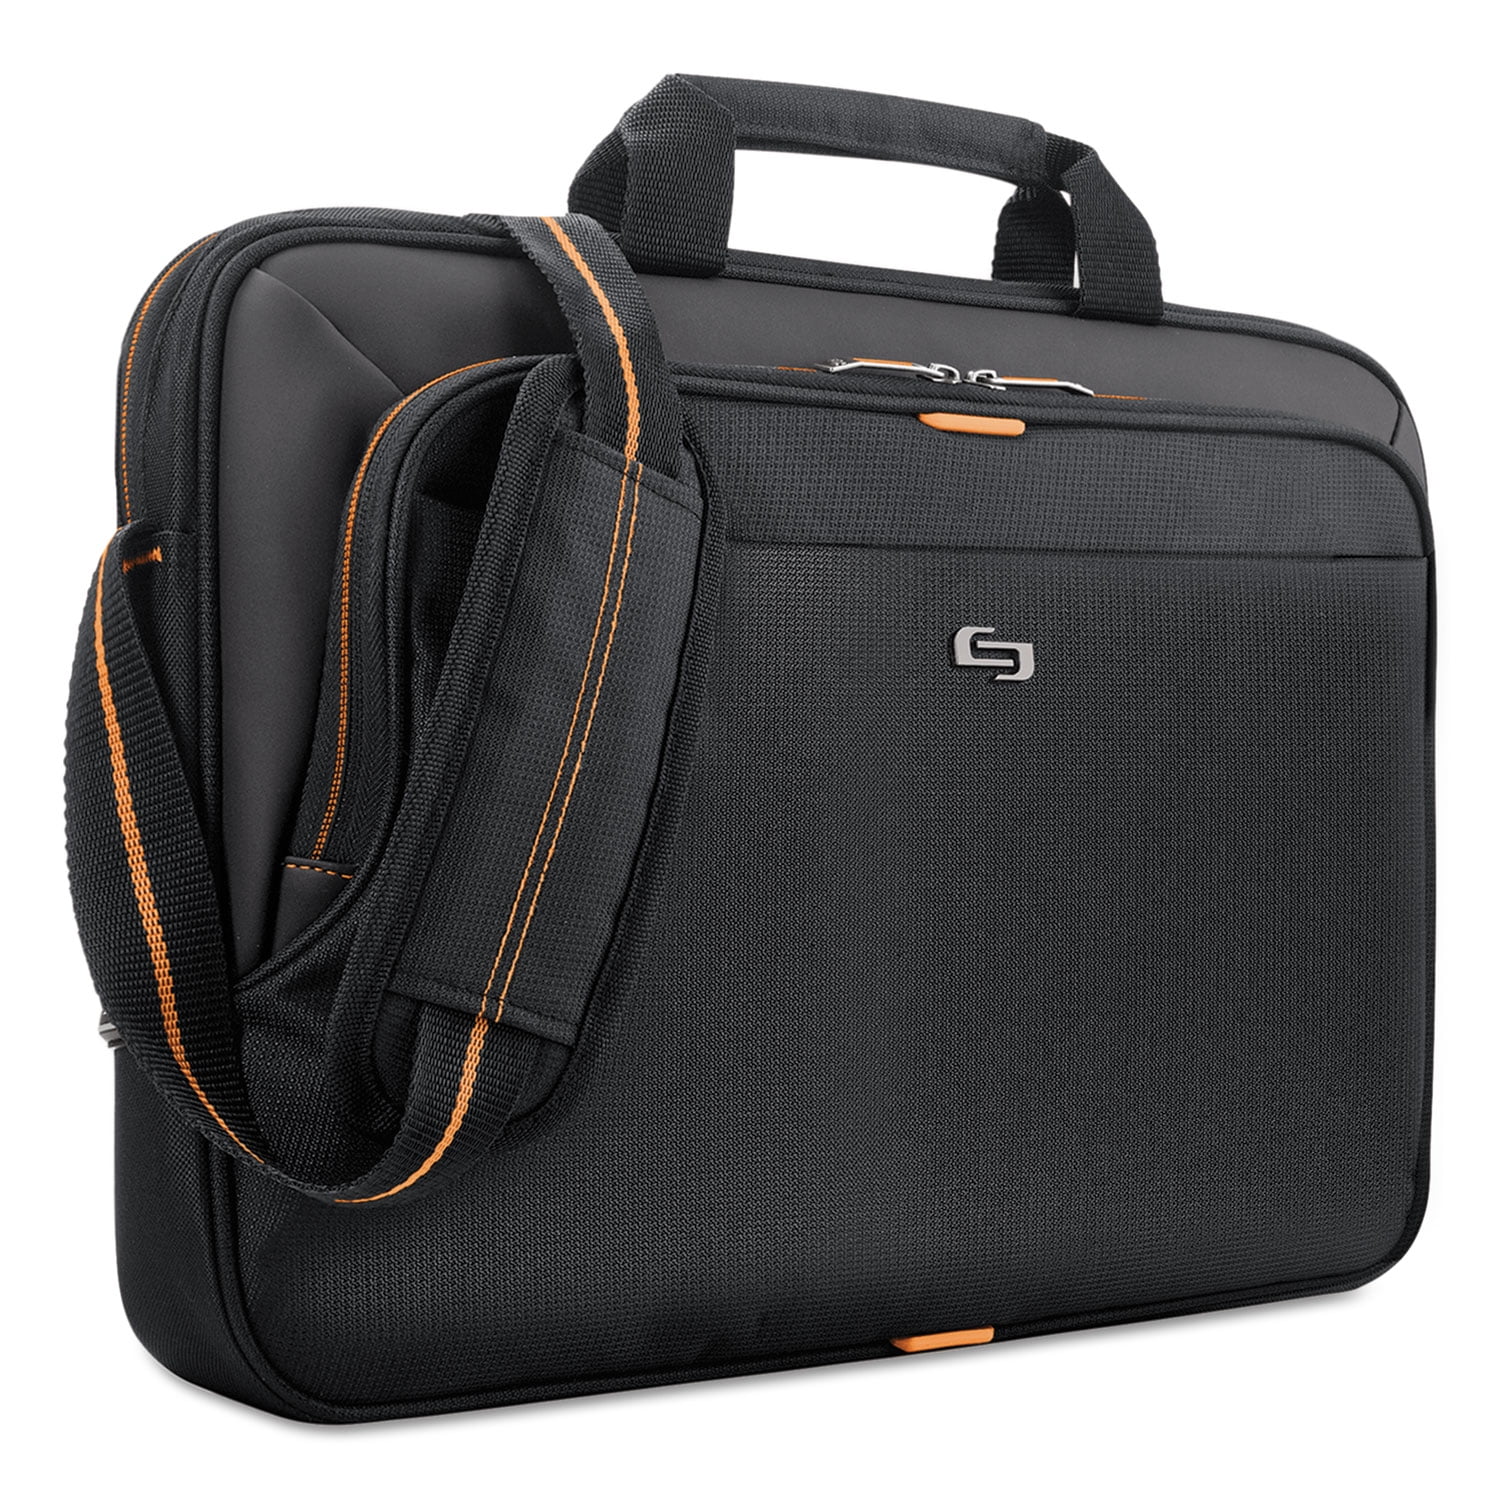 WIWU 11.6/12 Inch Laptop Shoulder Bag Slim, Laptop Sleeve Bag Briefcase  Handbag Carrying Case for Macbook ThinkPad Dell HP Acer ASUS Toshiba  Samsung Chromebook (11-12 inch, Black) - Newegg.com